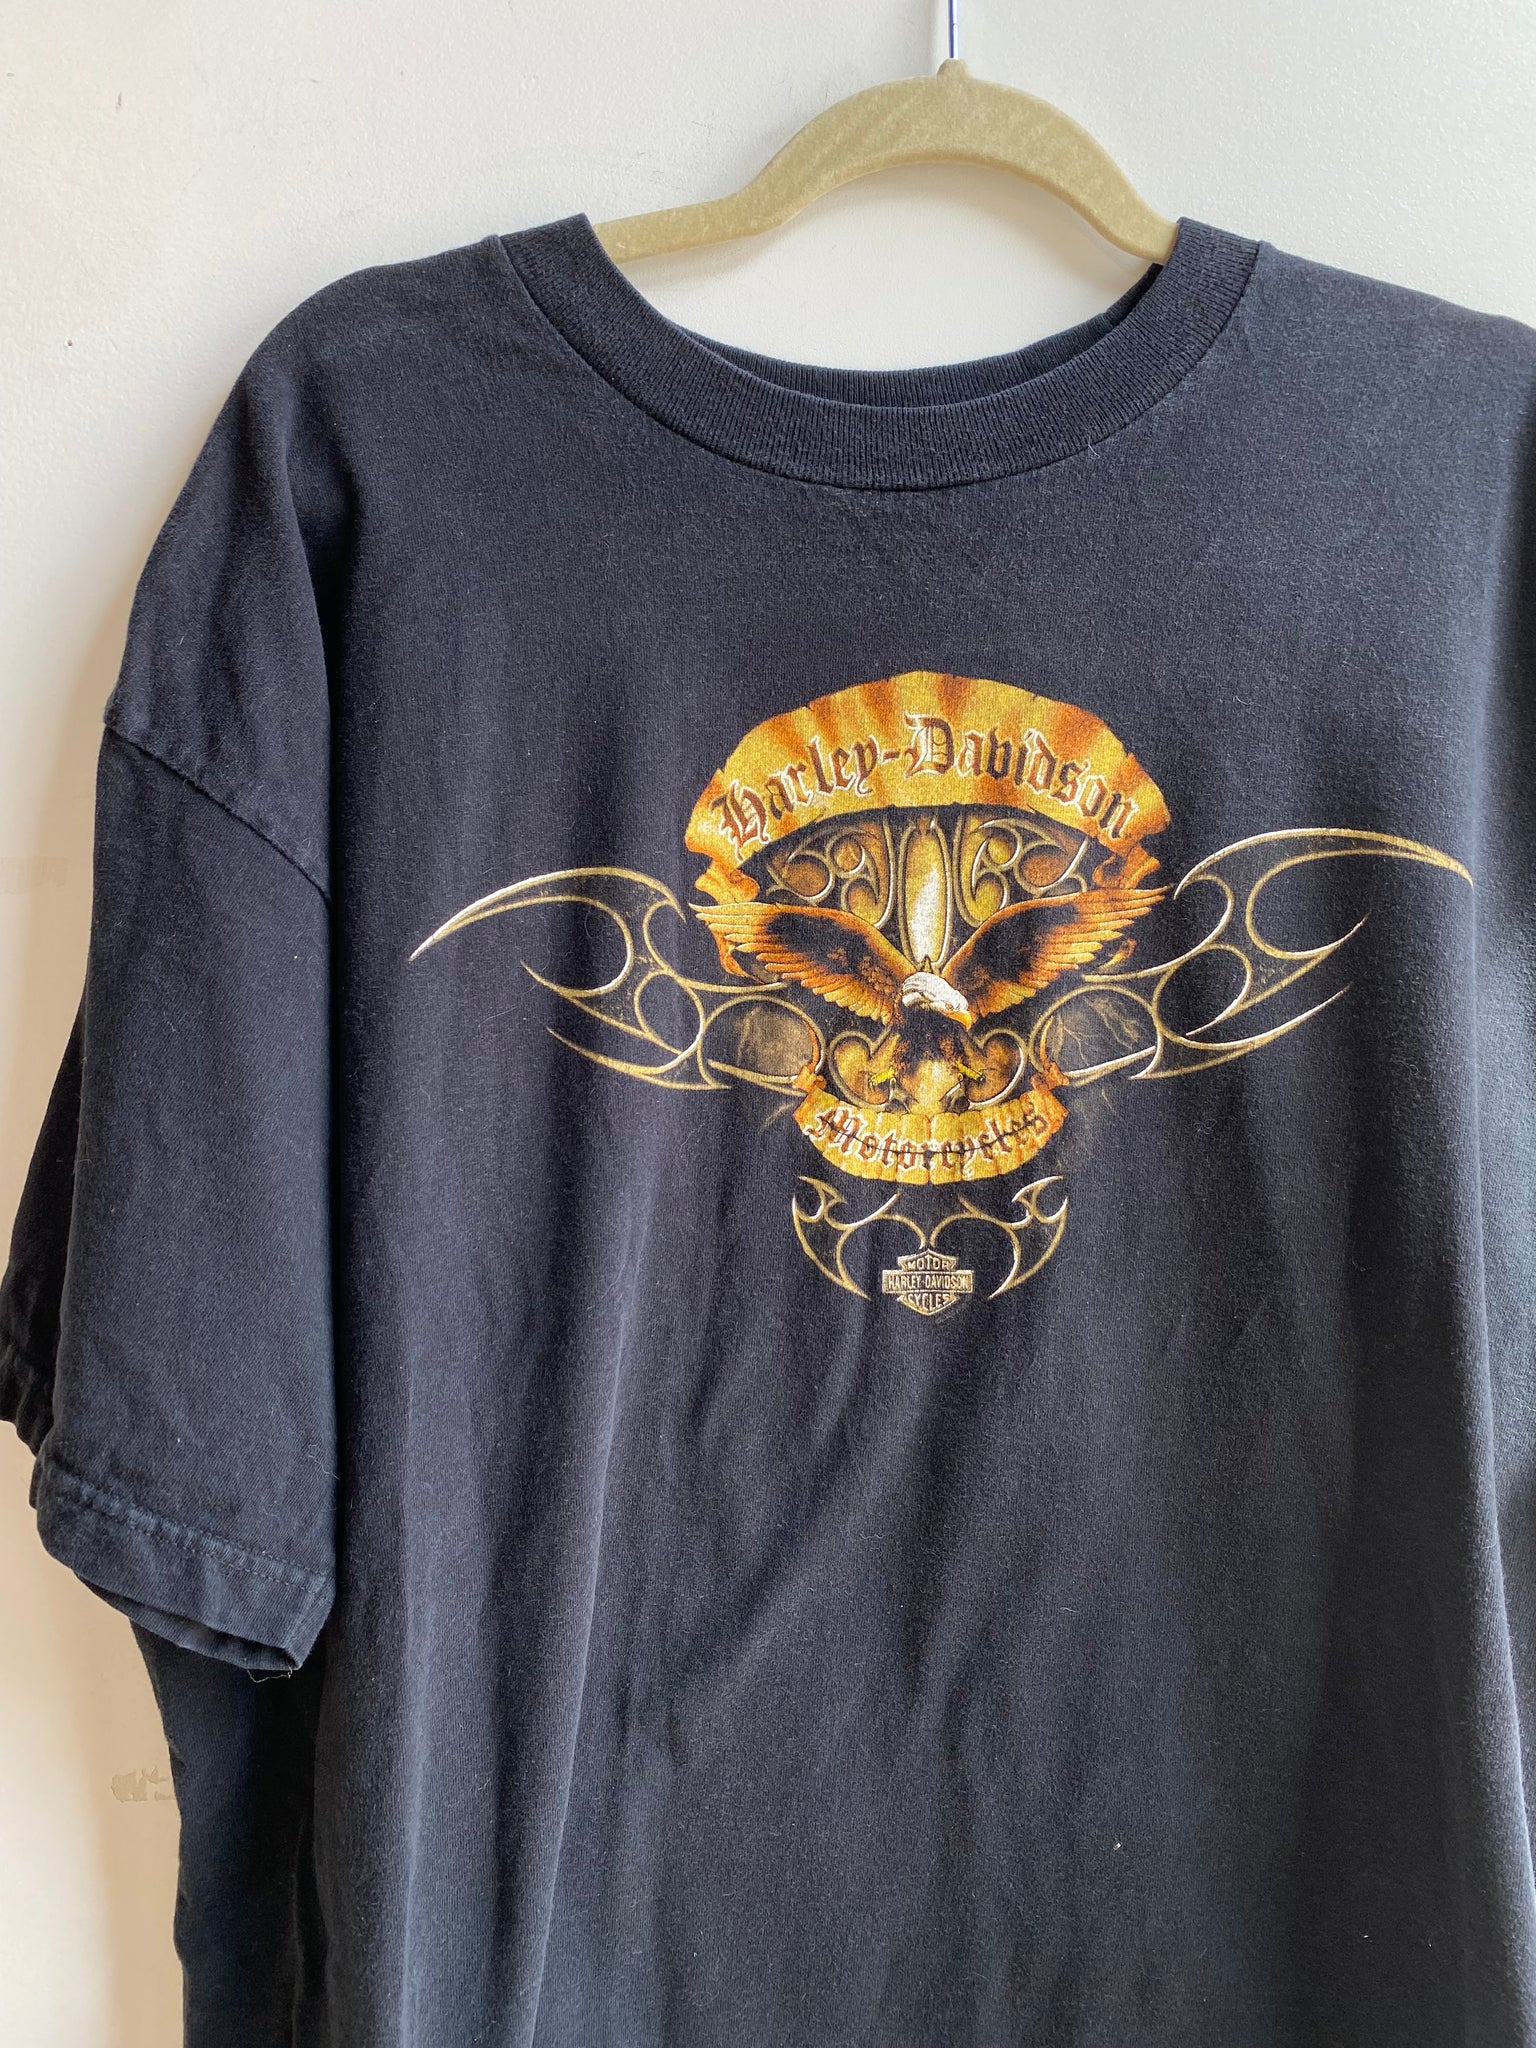 2003 Colorado Harley Davidson Tee Shirt